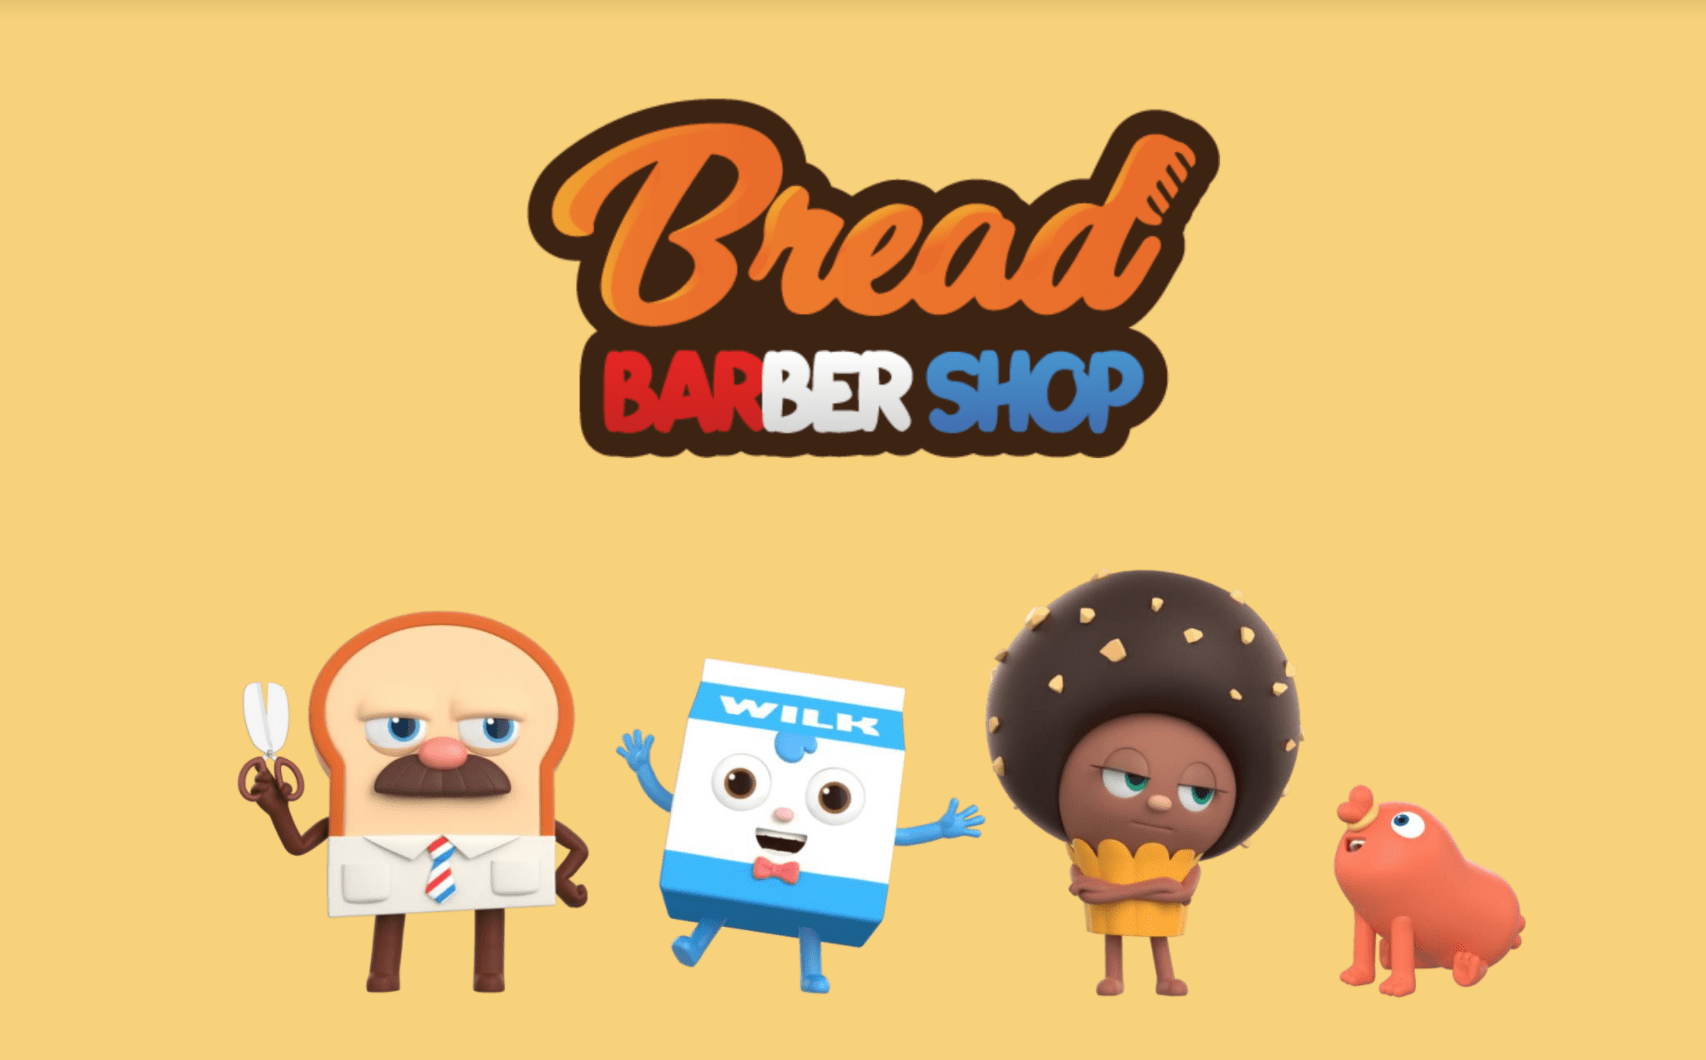 Bread Barber Shop by Monster Studio